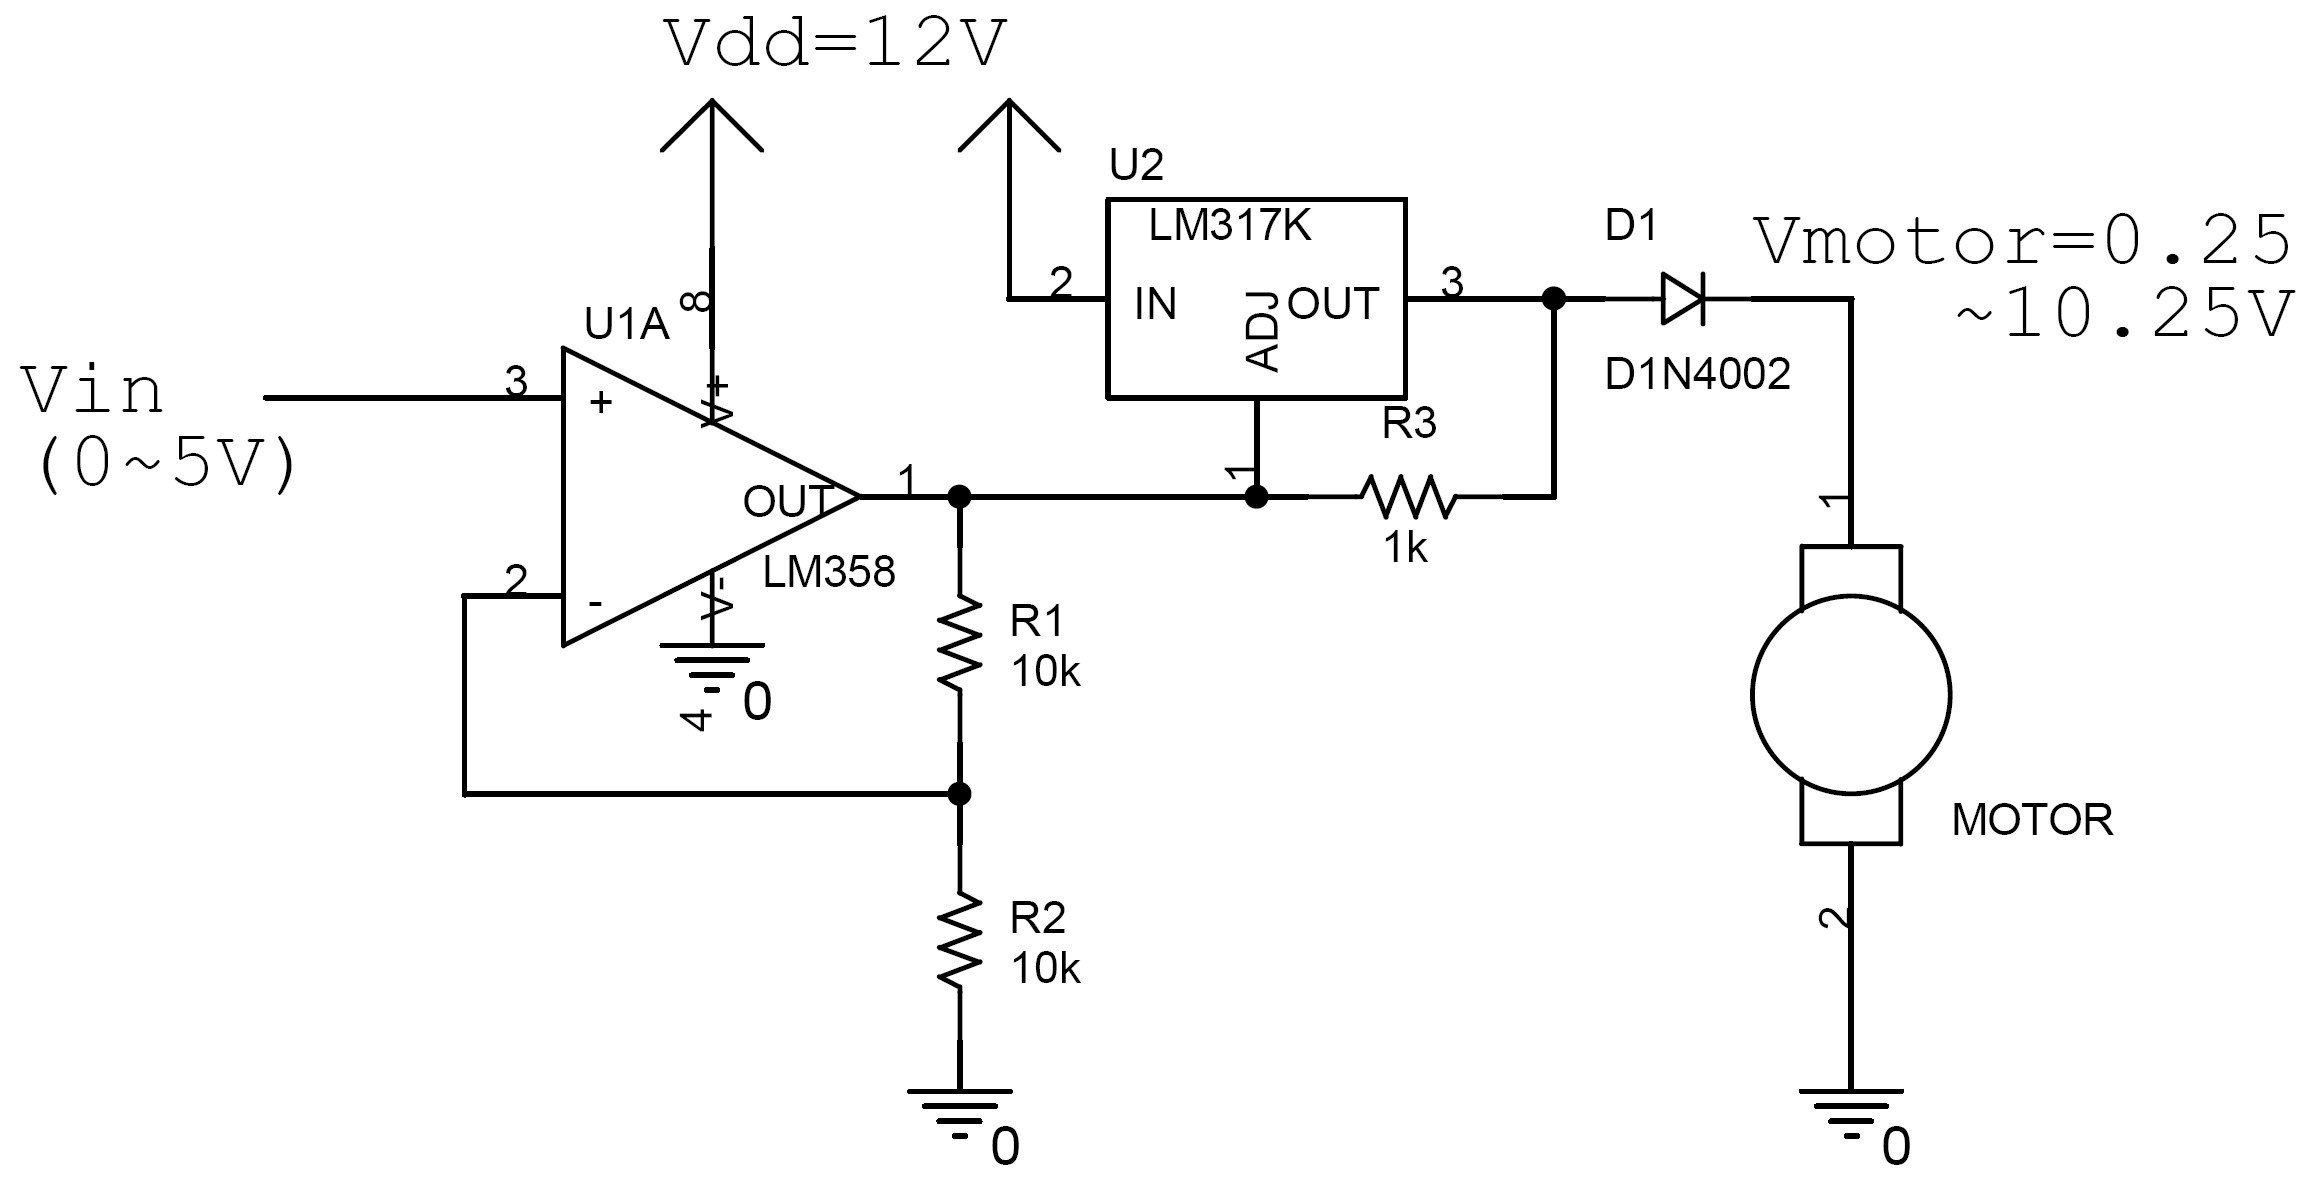 Wiring Diagram For Reversing A Dc Motor Save Forward Reverse Wiring Diagram Dc Motor Valid Forward Reverse Motor